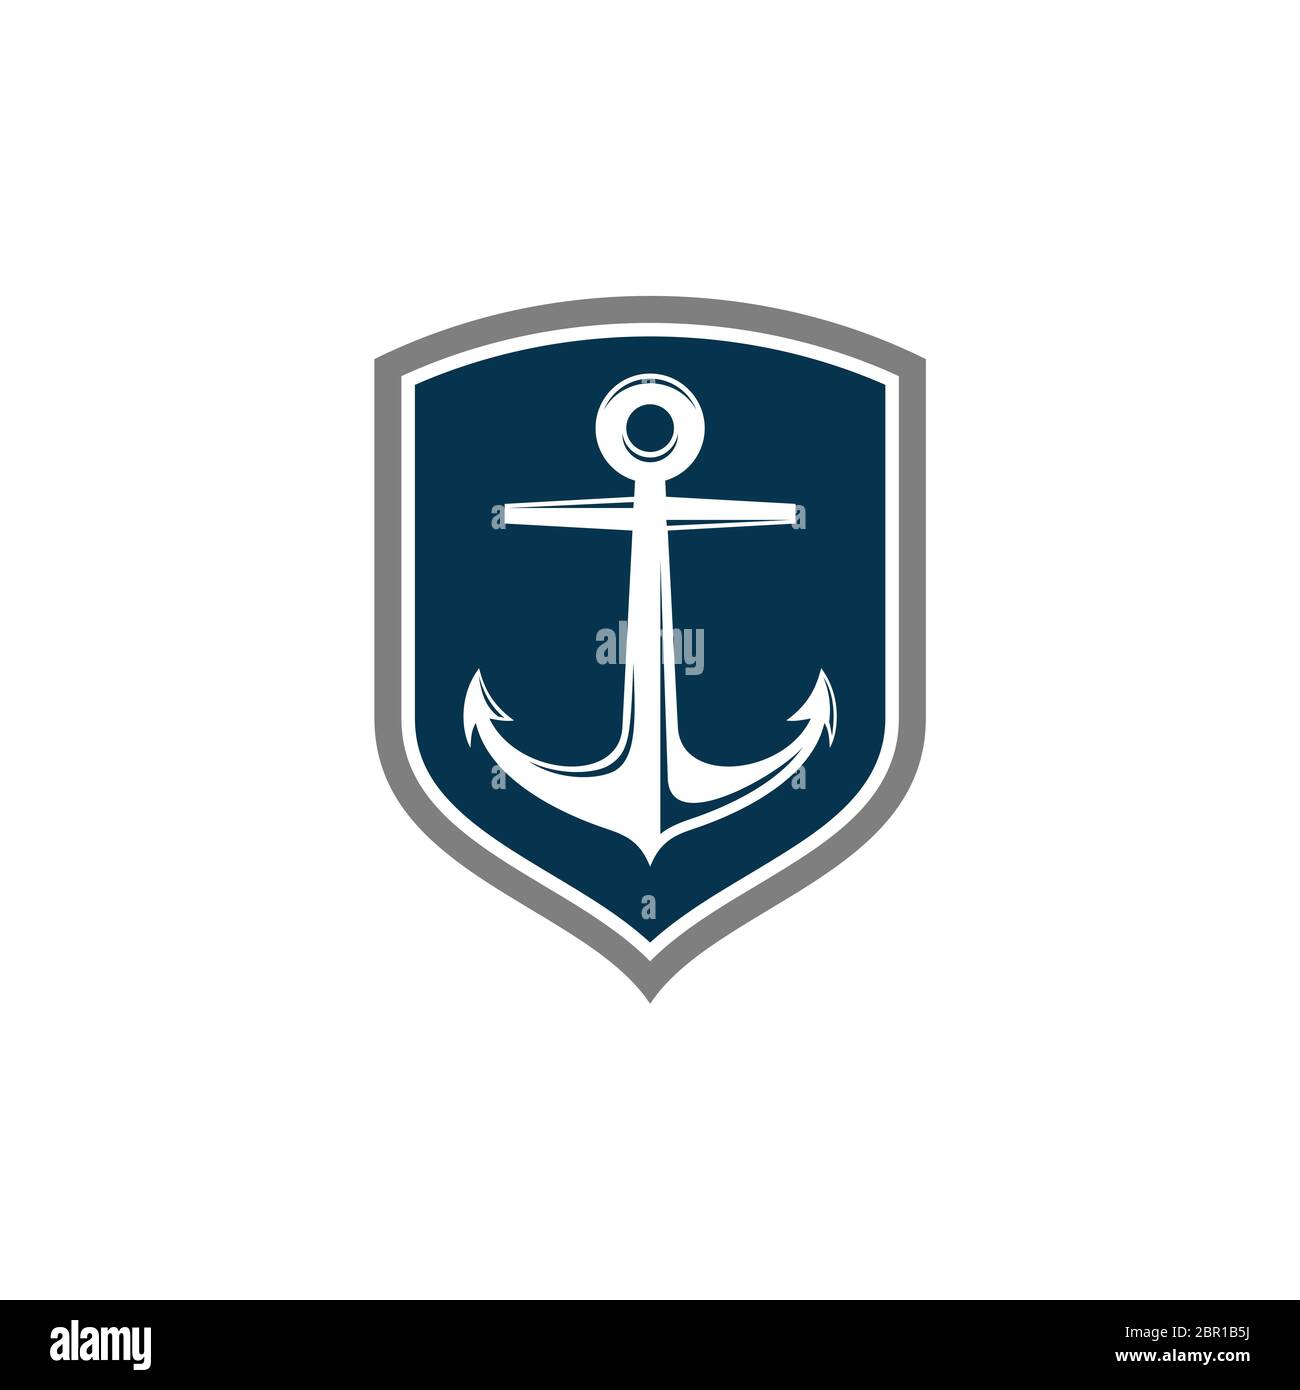 Anchor Logo Template Illustration Design. Vector EPS 10 Stock